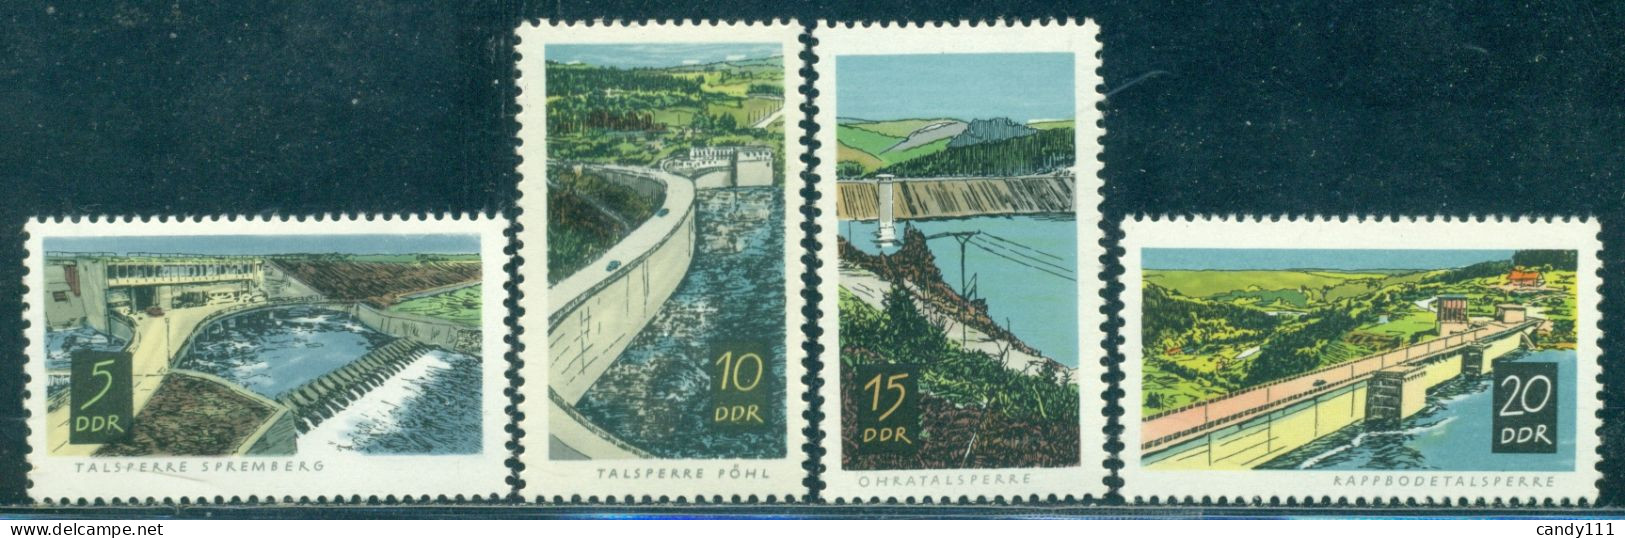 1968 Dam,Ohratalsperre,Ohratalsperre,drinking Water,DDR,1400,MNH - Acqua